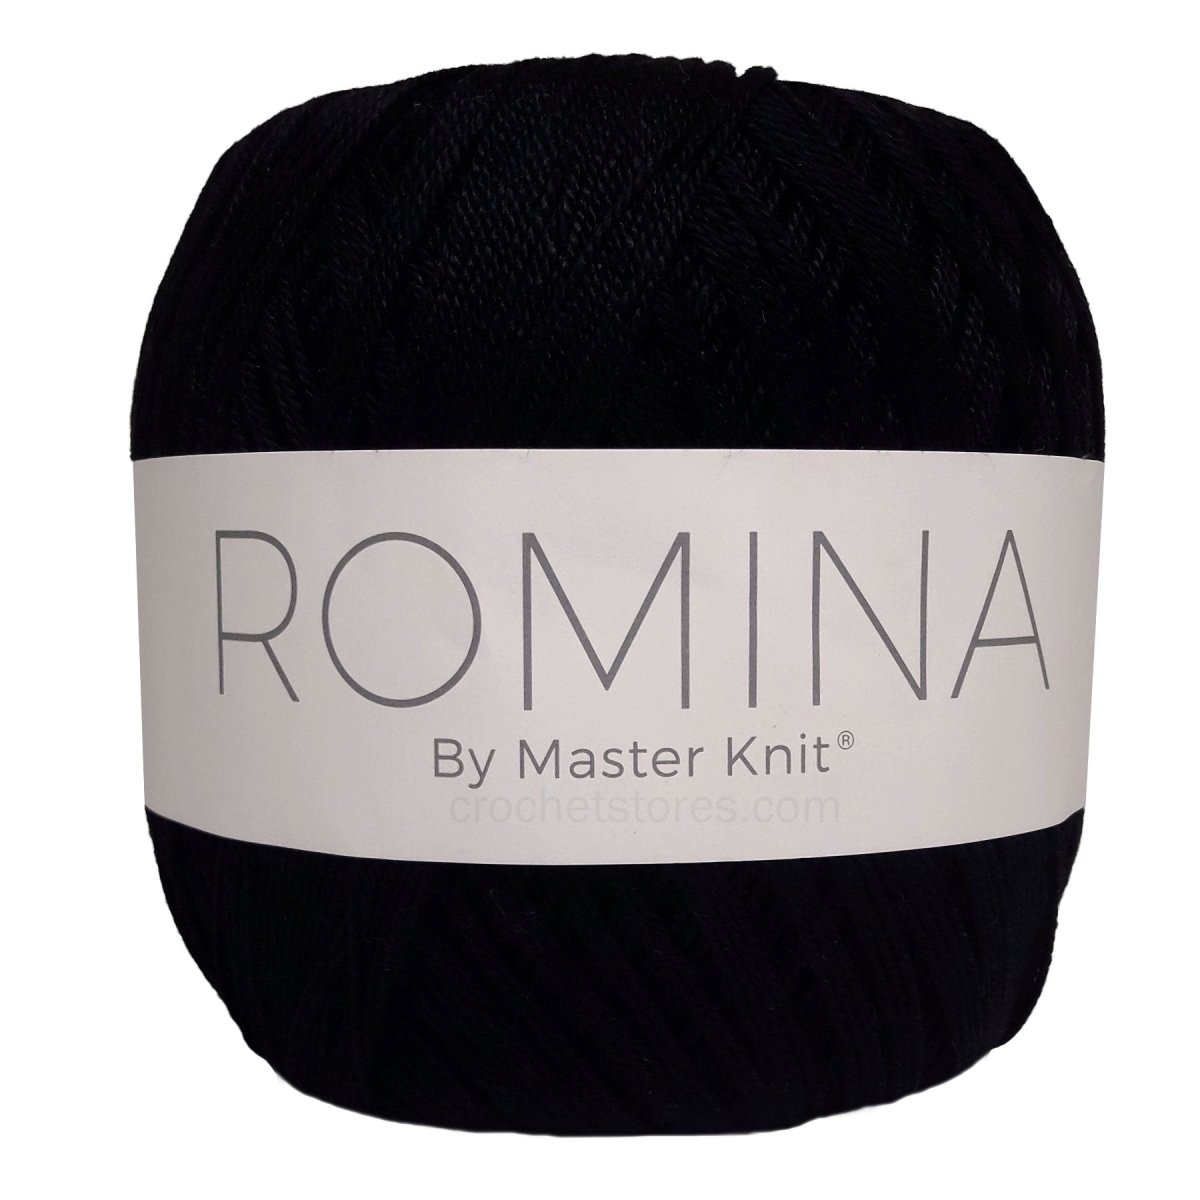 ROMINA - Crochetstores9335-300745051438609